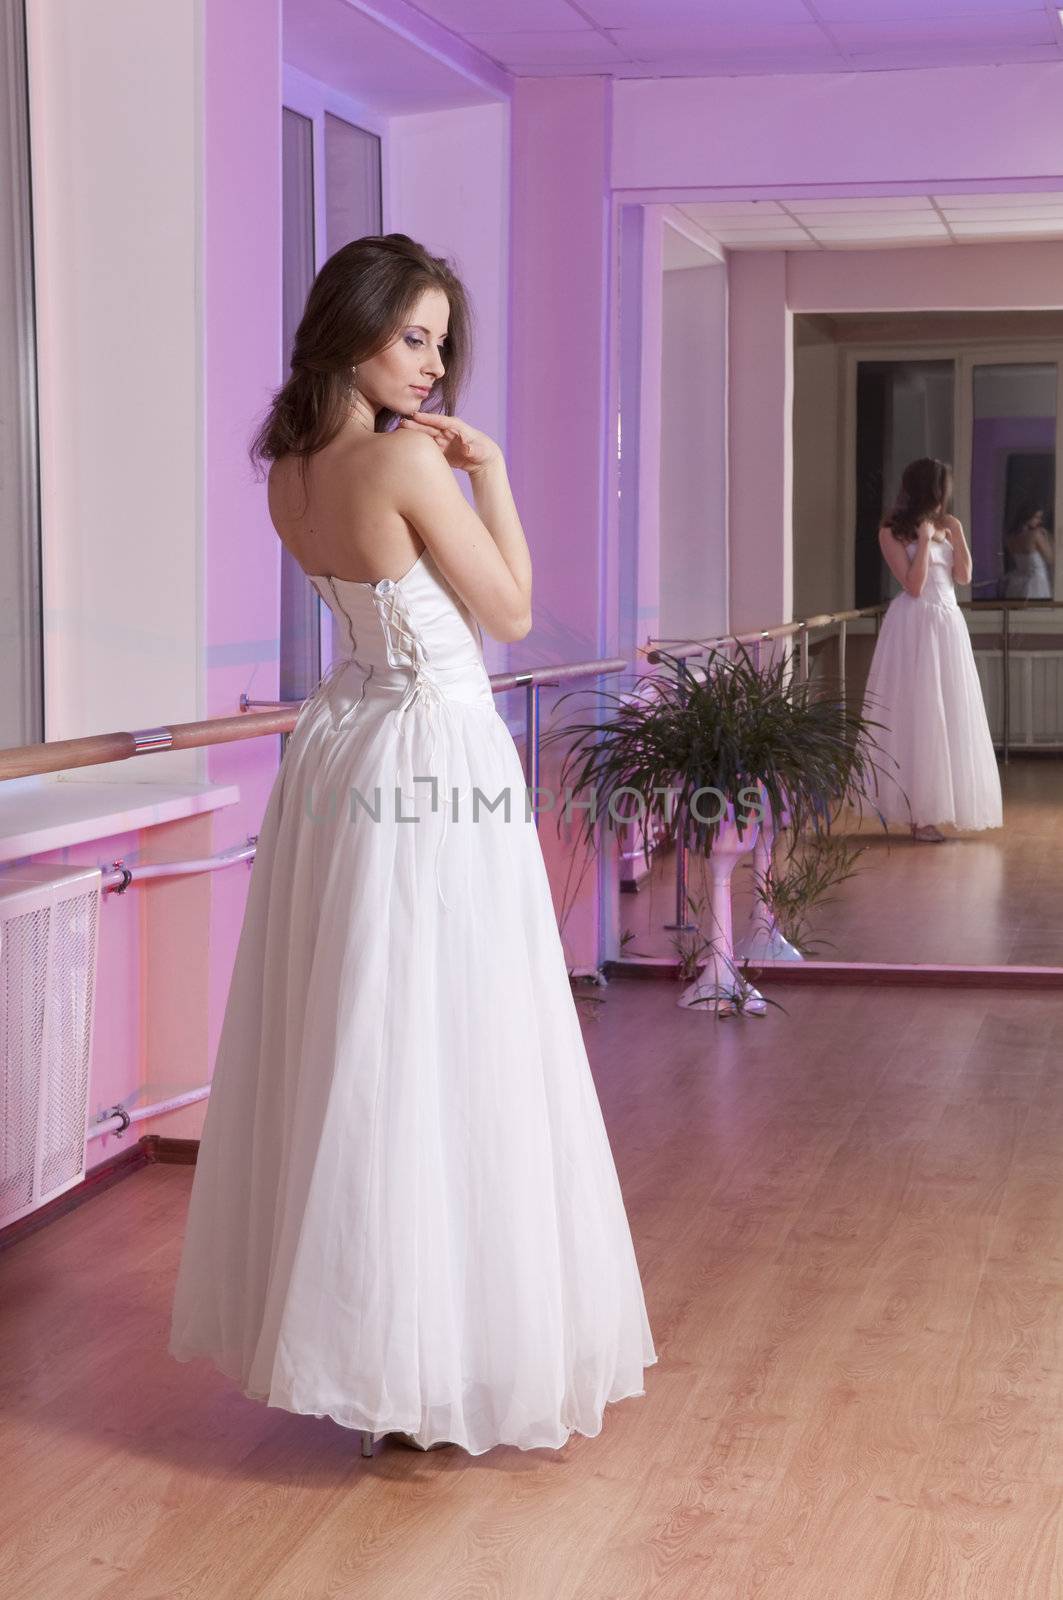 Girl in white wedding dress in dance studio